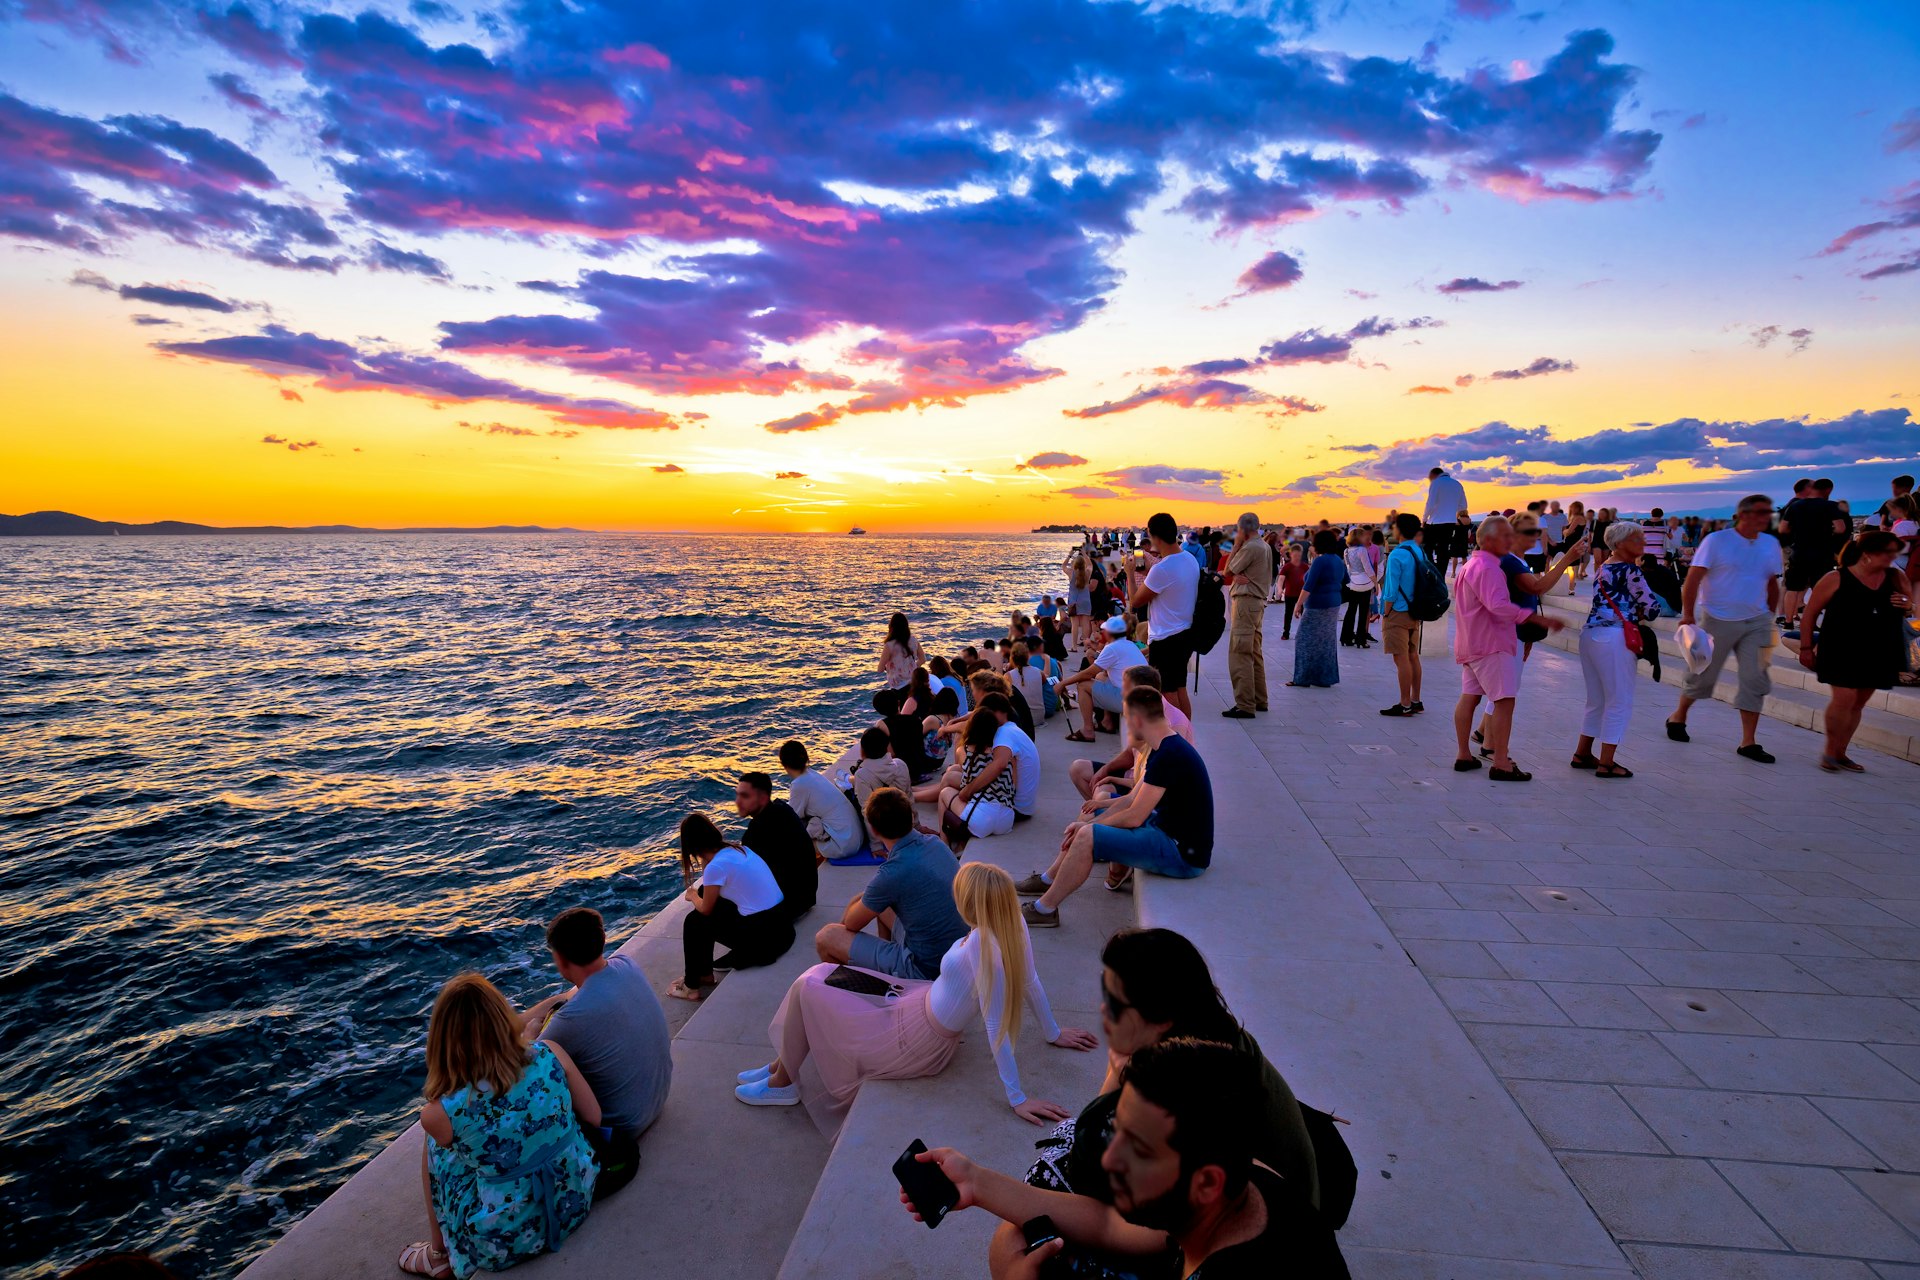 People gather at the “Sea Organ” installation during sunset, Zadar, Croatia